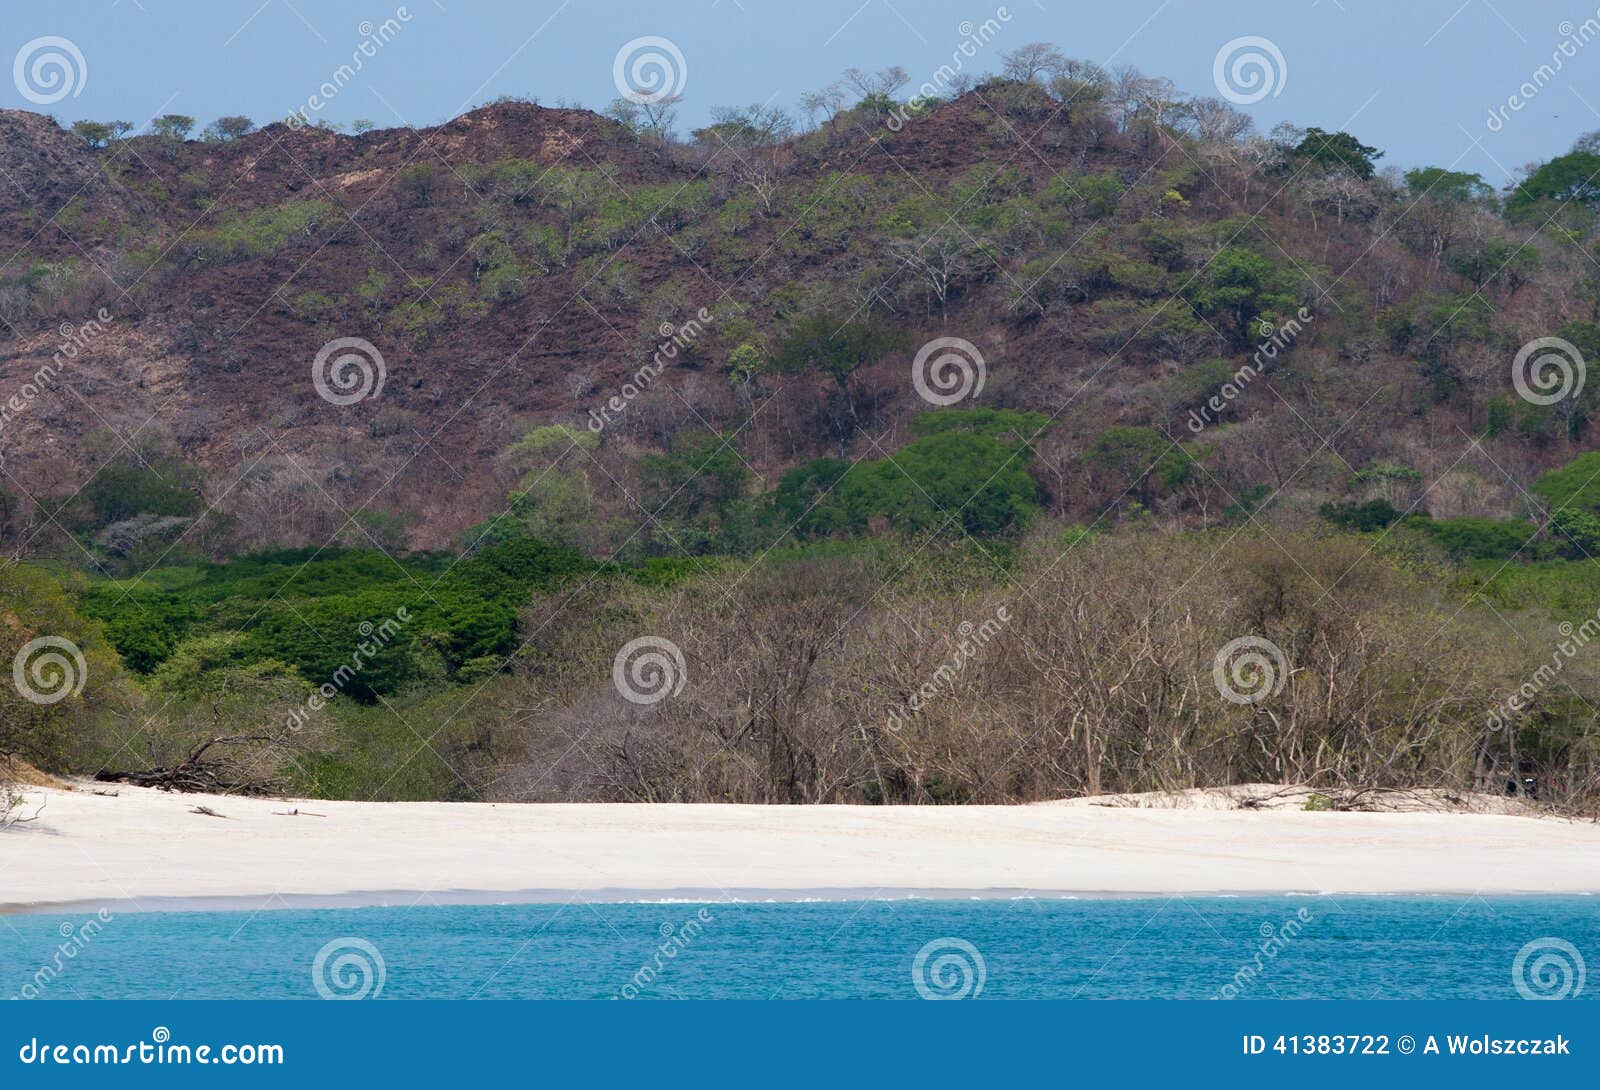 playa conchal beach in costa rica